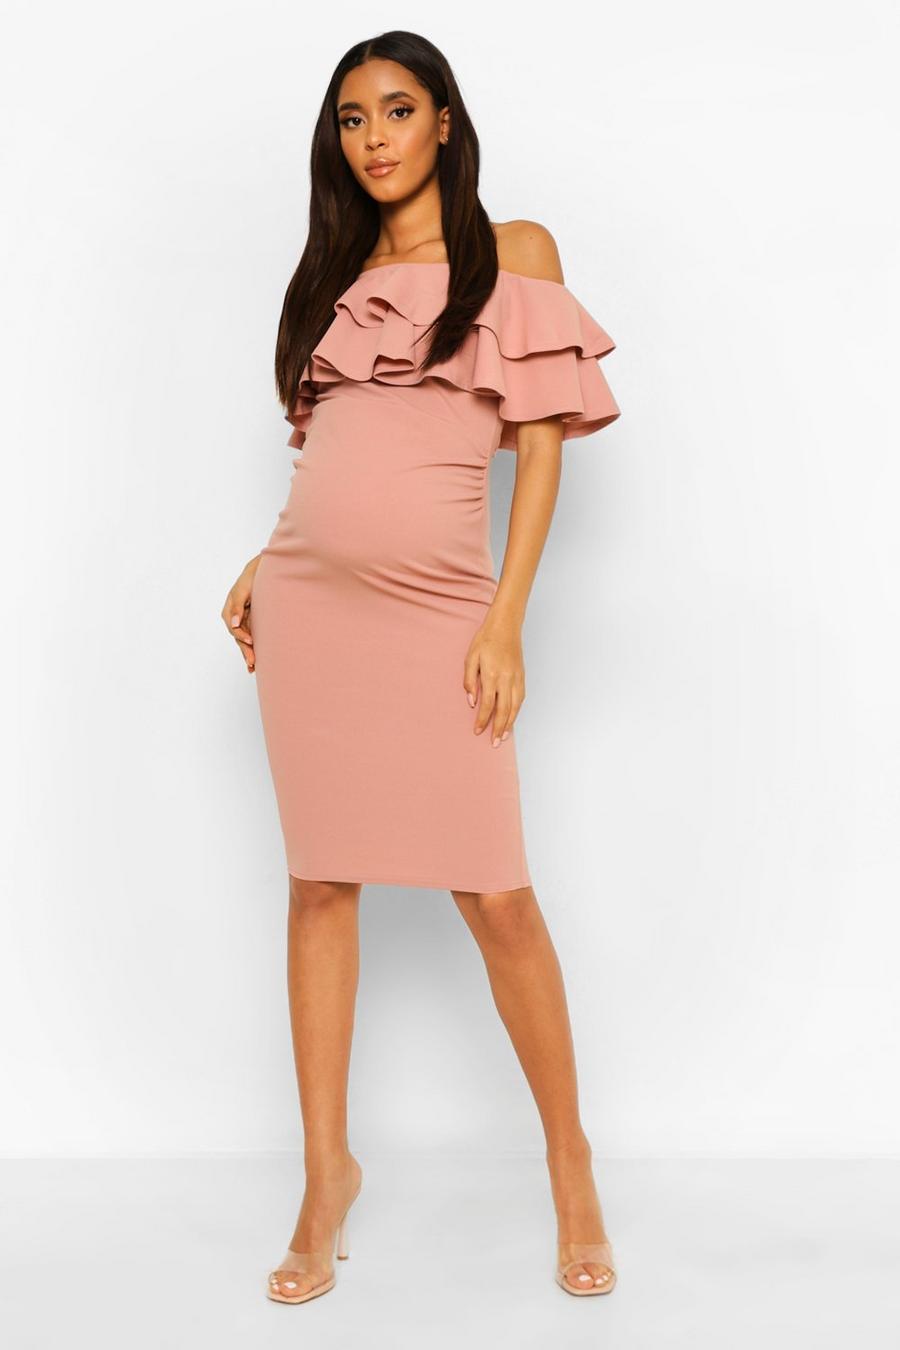 Desert rose pink Maternity  Ruffle Off The Shoulder Midi Dress